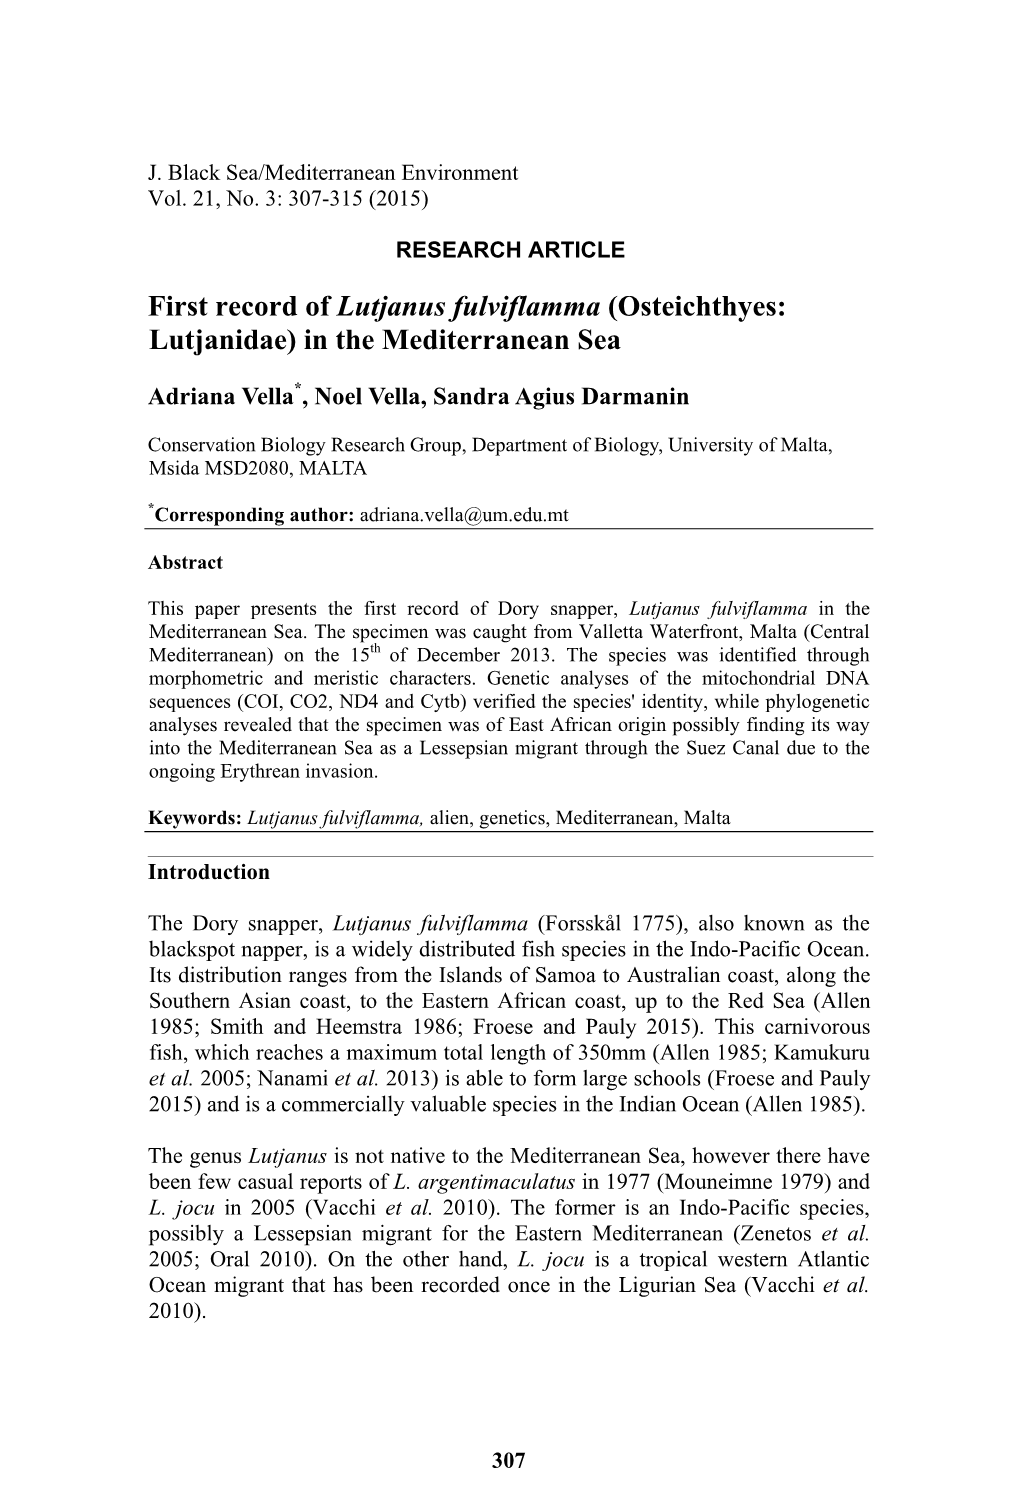 First Record of Lutjanus Fulviflamma (Osteichthyes: Lutjanidae) in the Mediterranean Sea